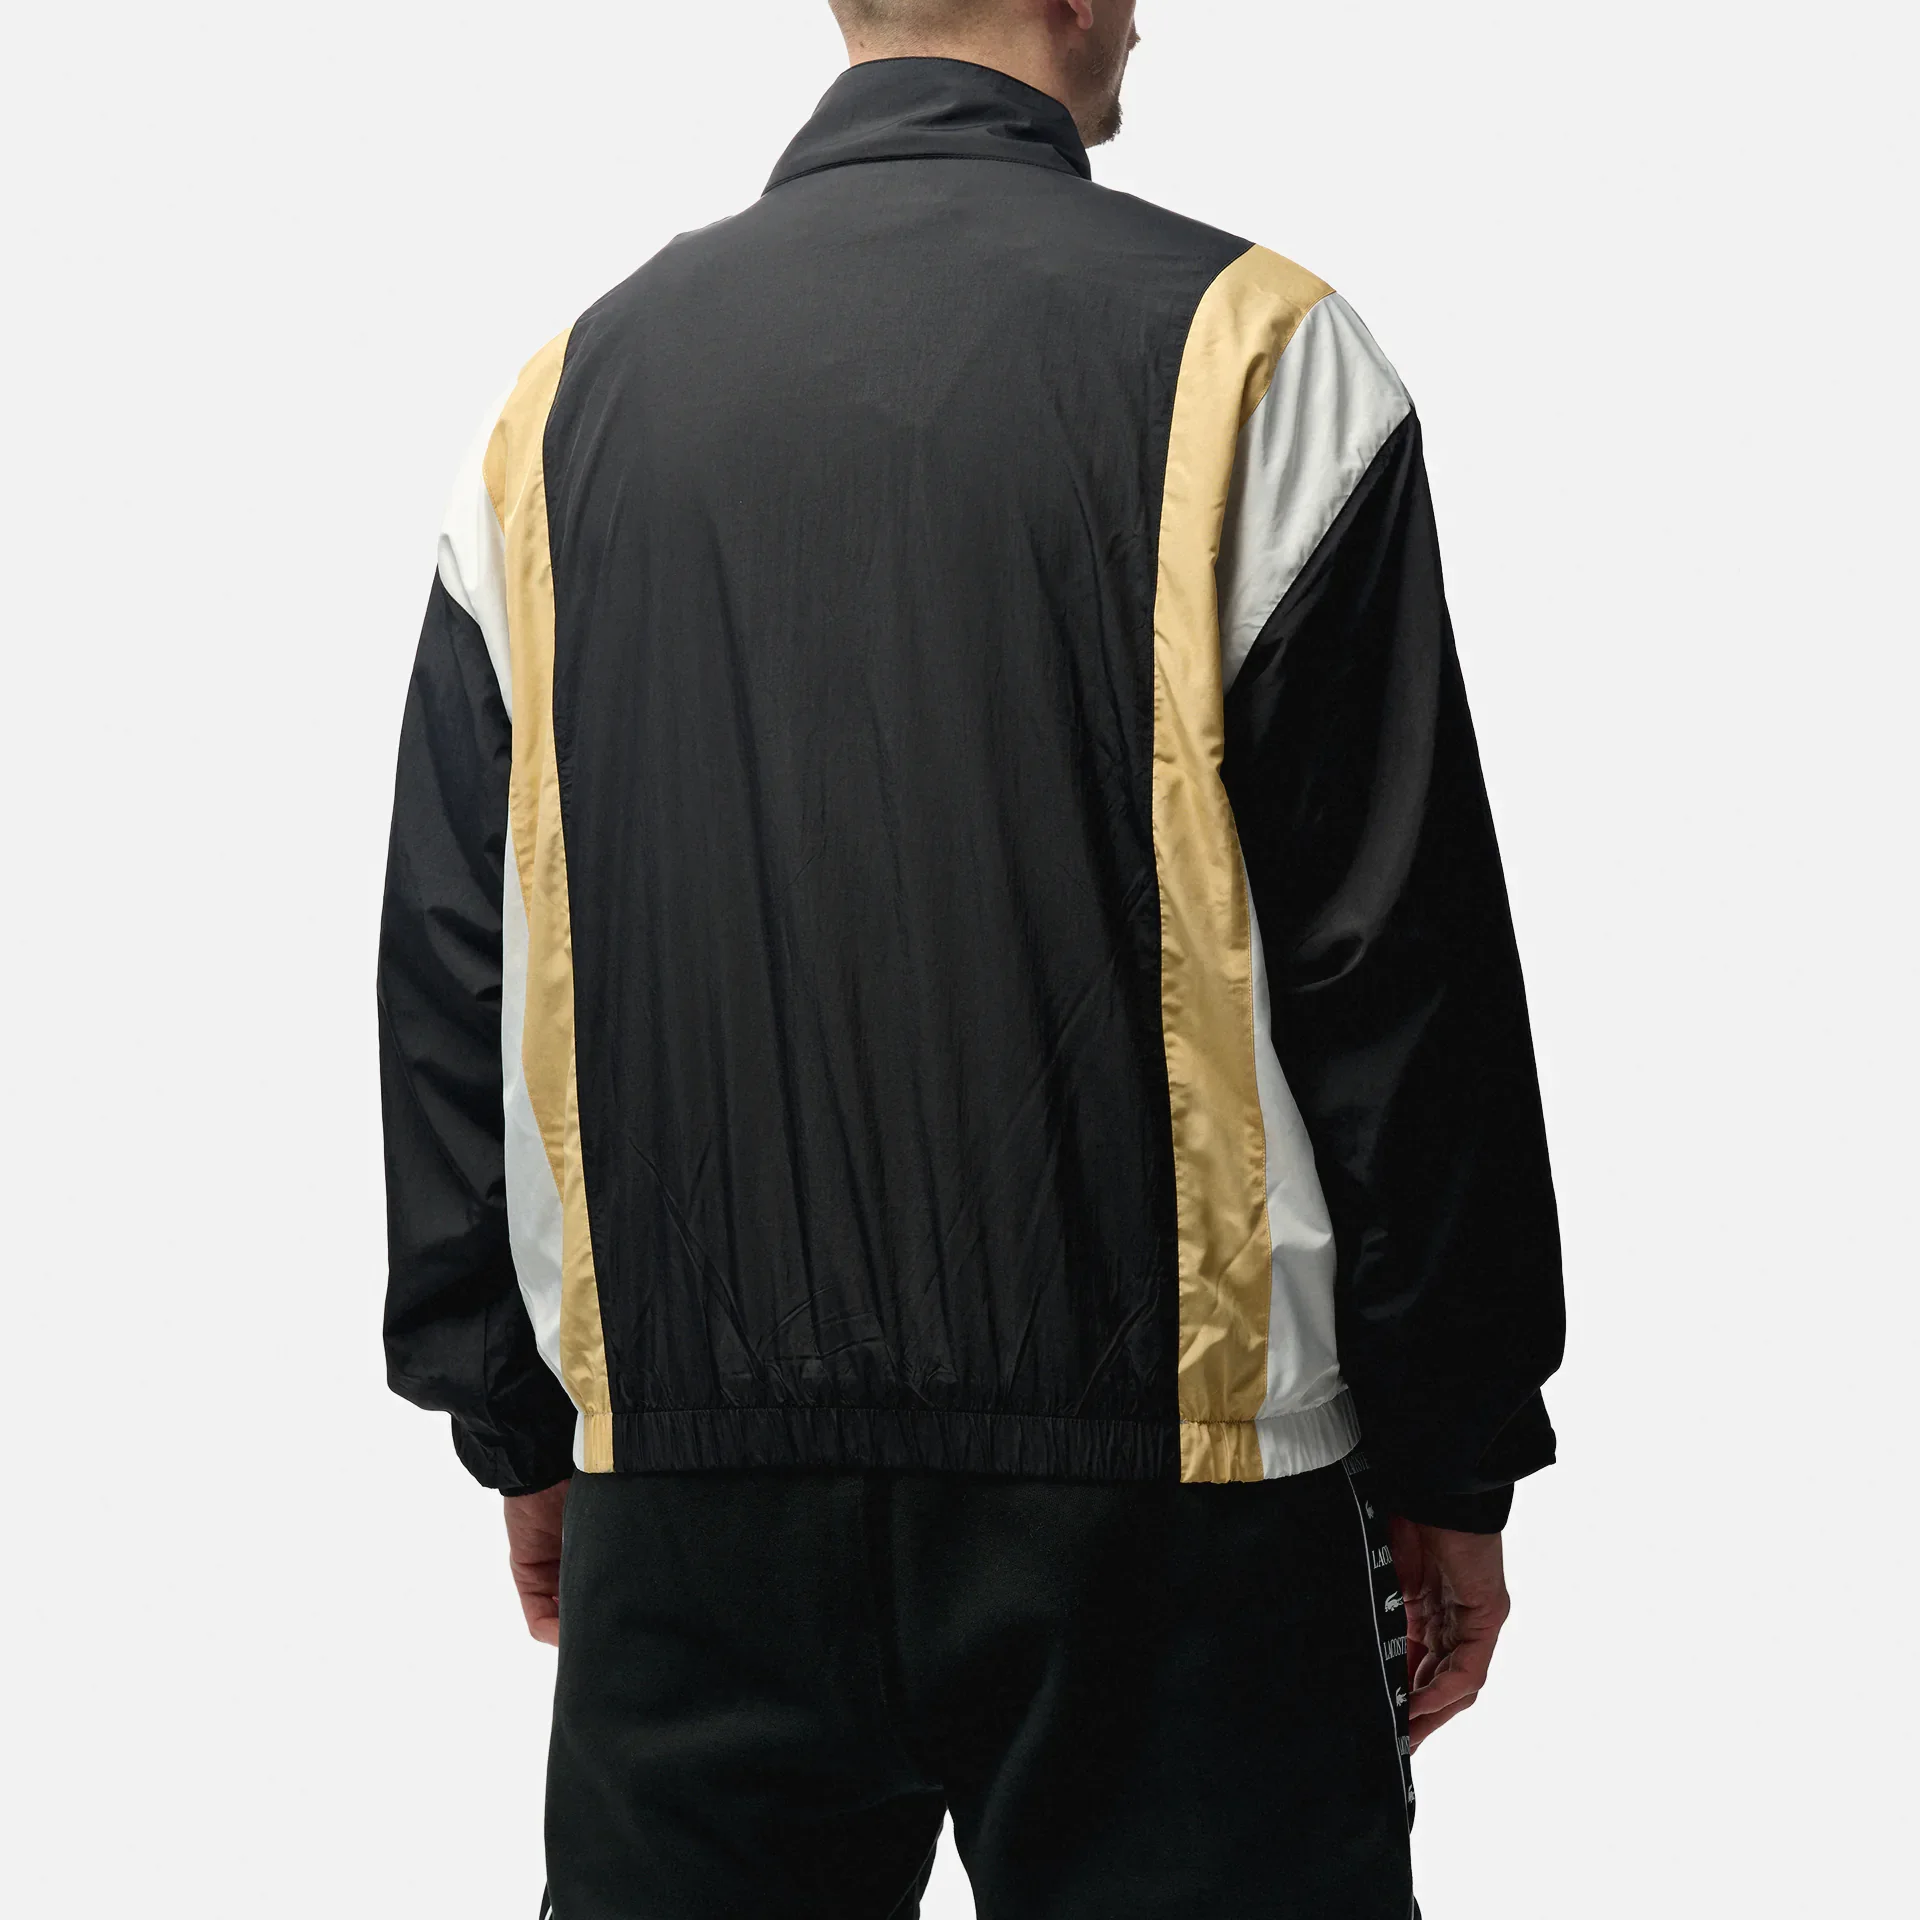  Lacoste Lightweight Showerproof Colorblock Track Jacket Noir/Croissant-Farine